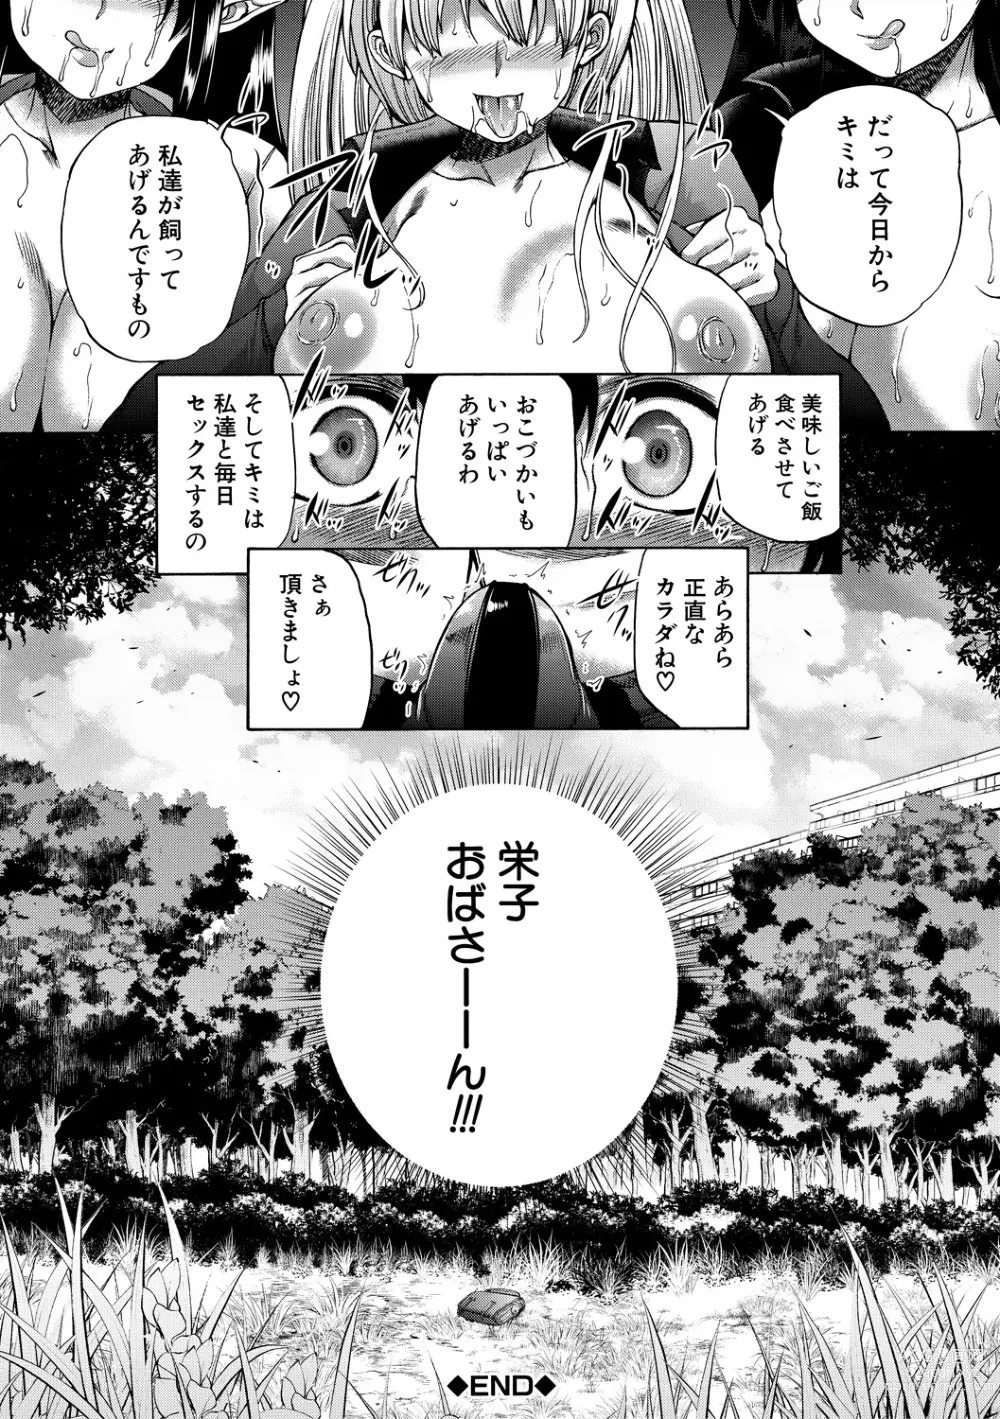 Page 190 of manga Maou Tensei Harem - Devil Reincarnation